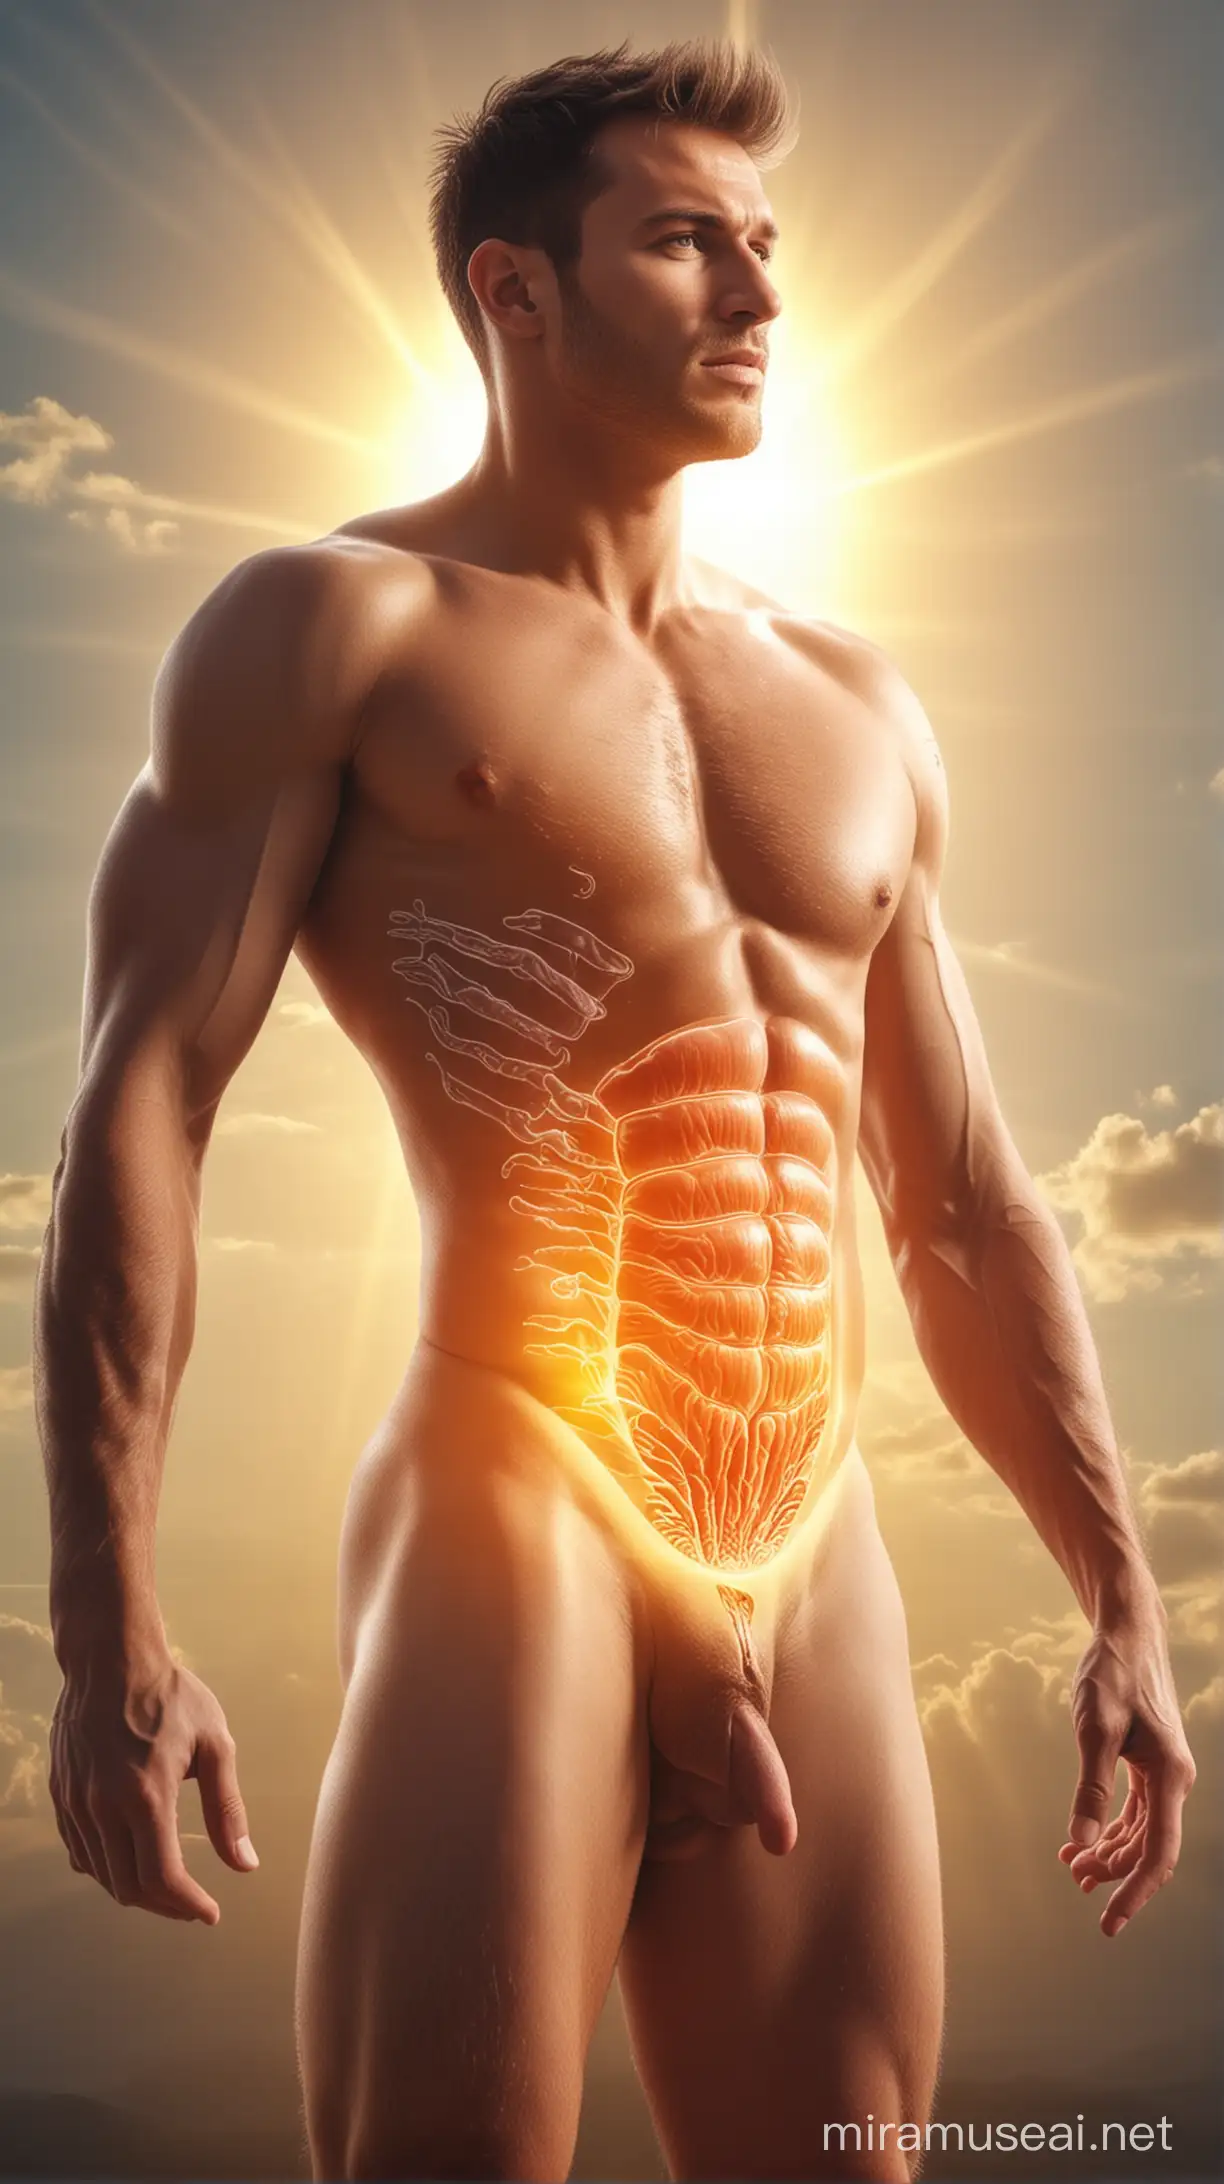 Mens Digestive System Diagram in Natural Sunlight